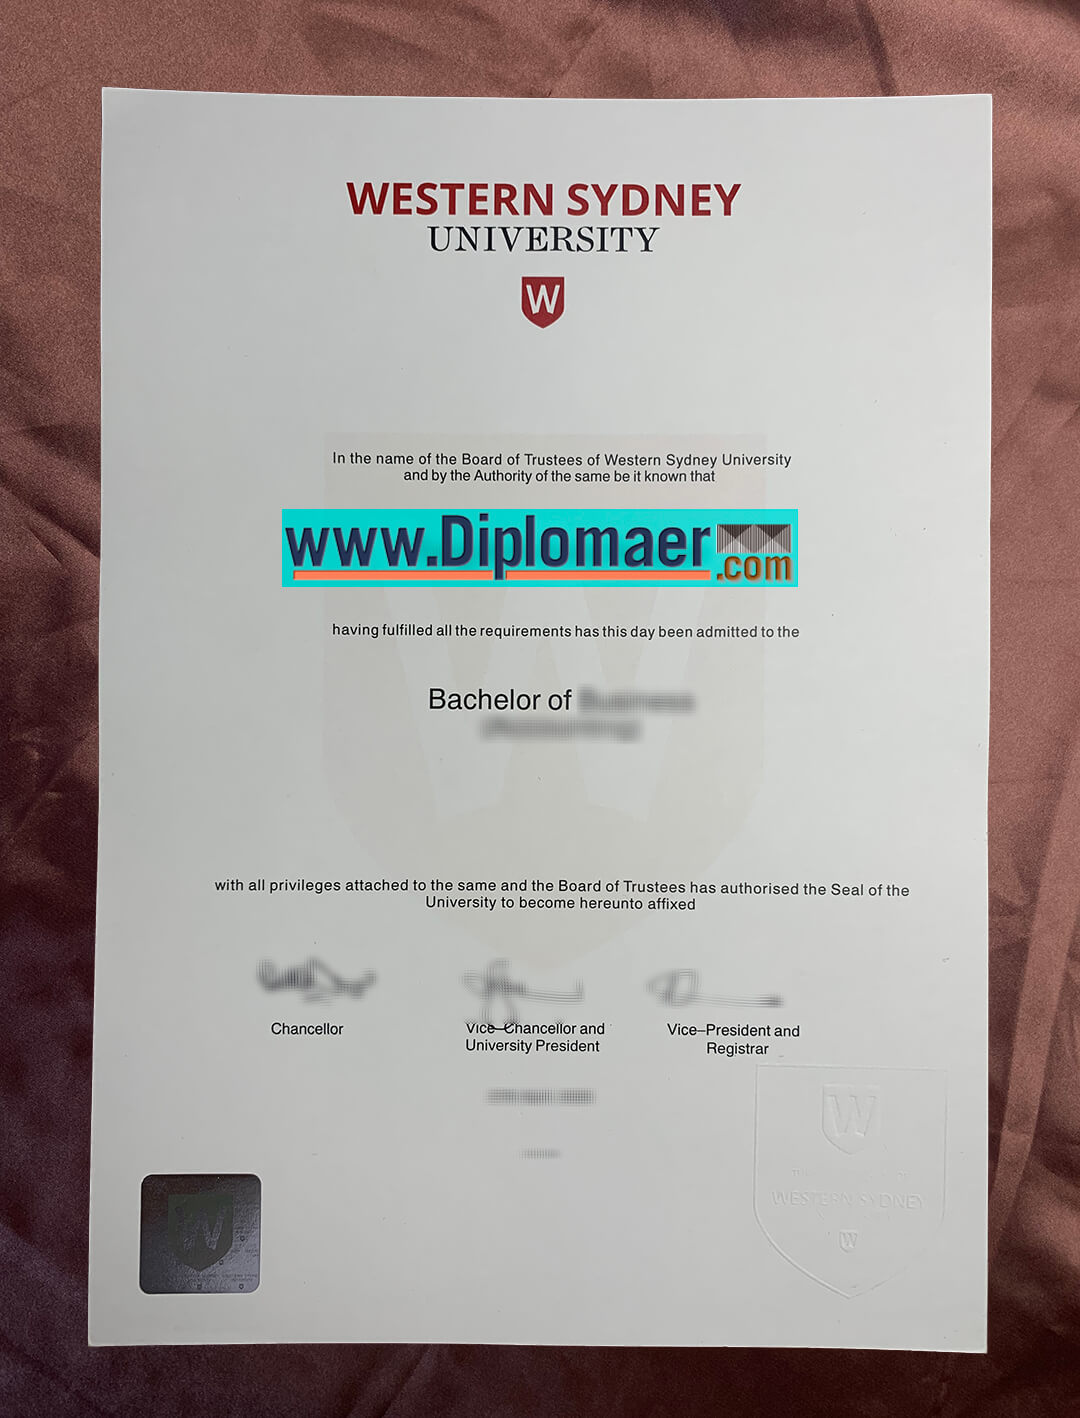 Western Sydney University fake diploma - Is a Western Sydney University diploma worth buying?